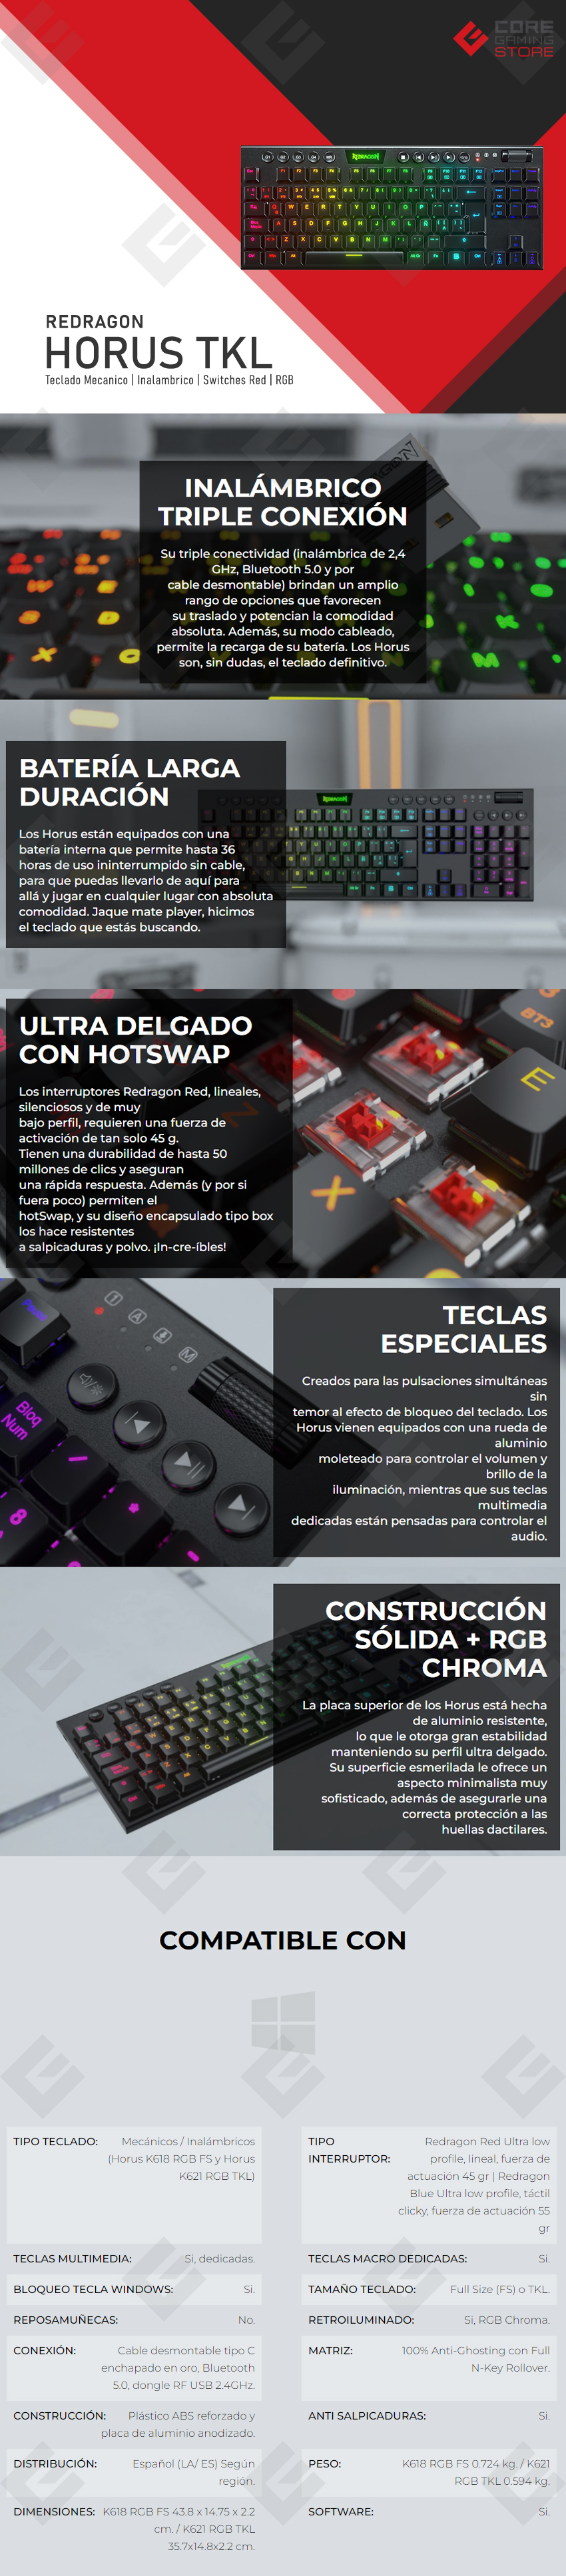 Teclado Gamer Mecánico Redragon Horus TKL RGB, Switches Red Ultra Low Profile, Alámbrico, USB, Iluminación LED RGB, Español - K622-RGB-SP